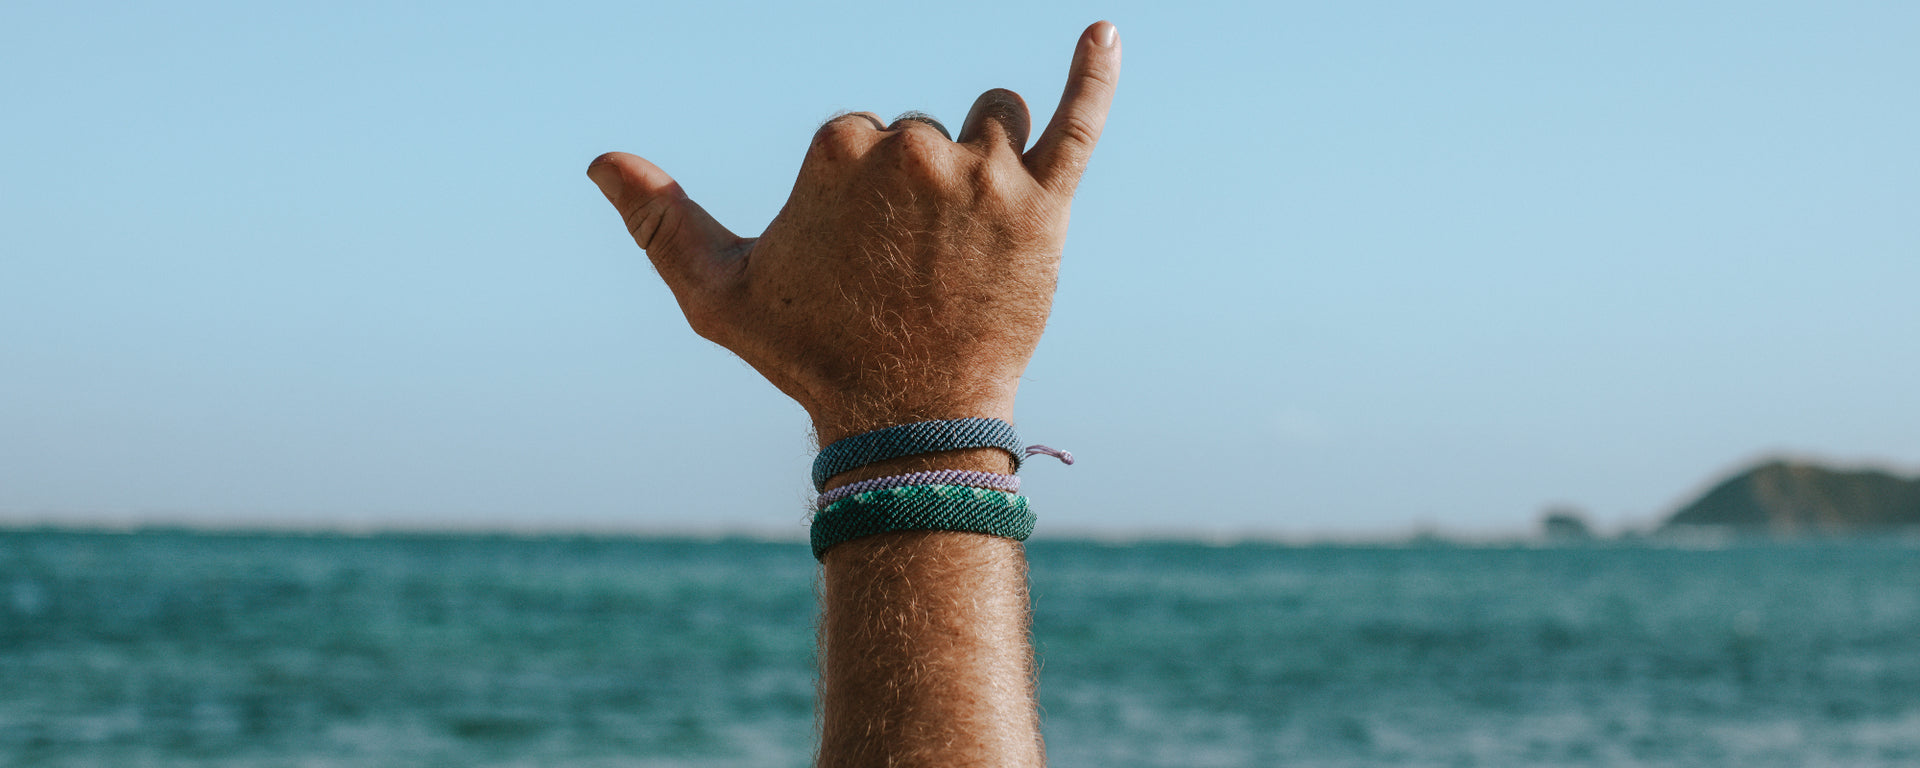  waxed waterproof bracelets on mens hand making shaka sign over the ocean